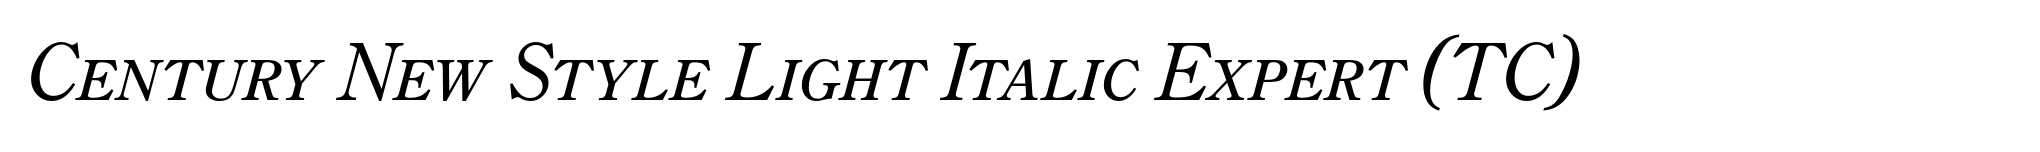 Century New Style Light Italic Expert (TC) image